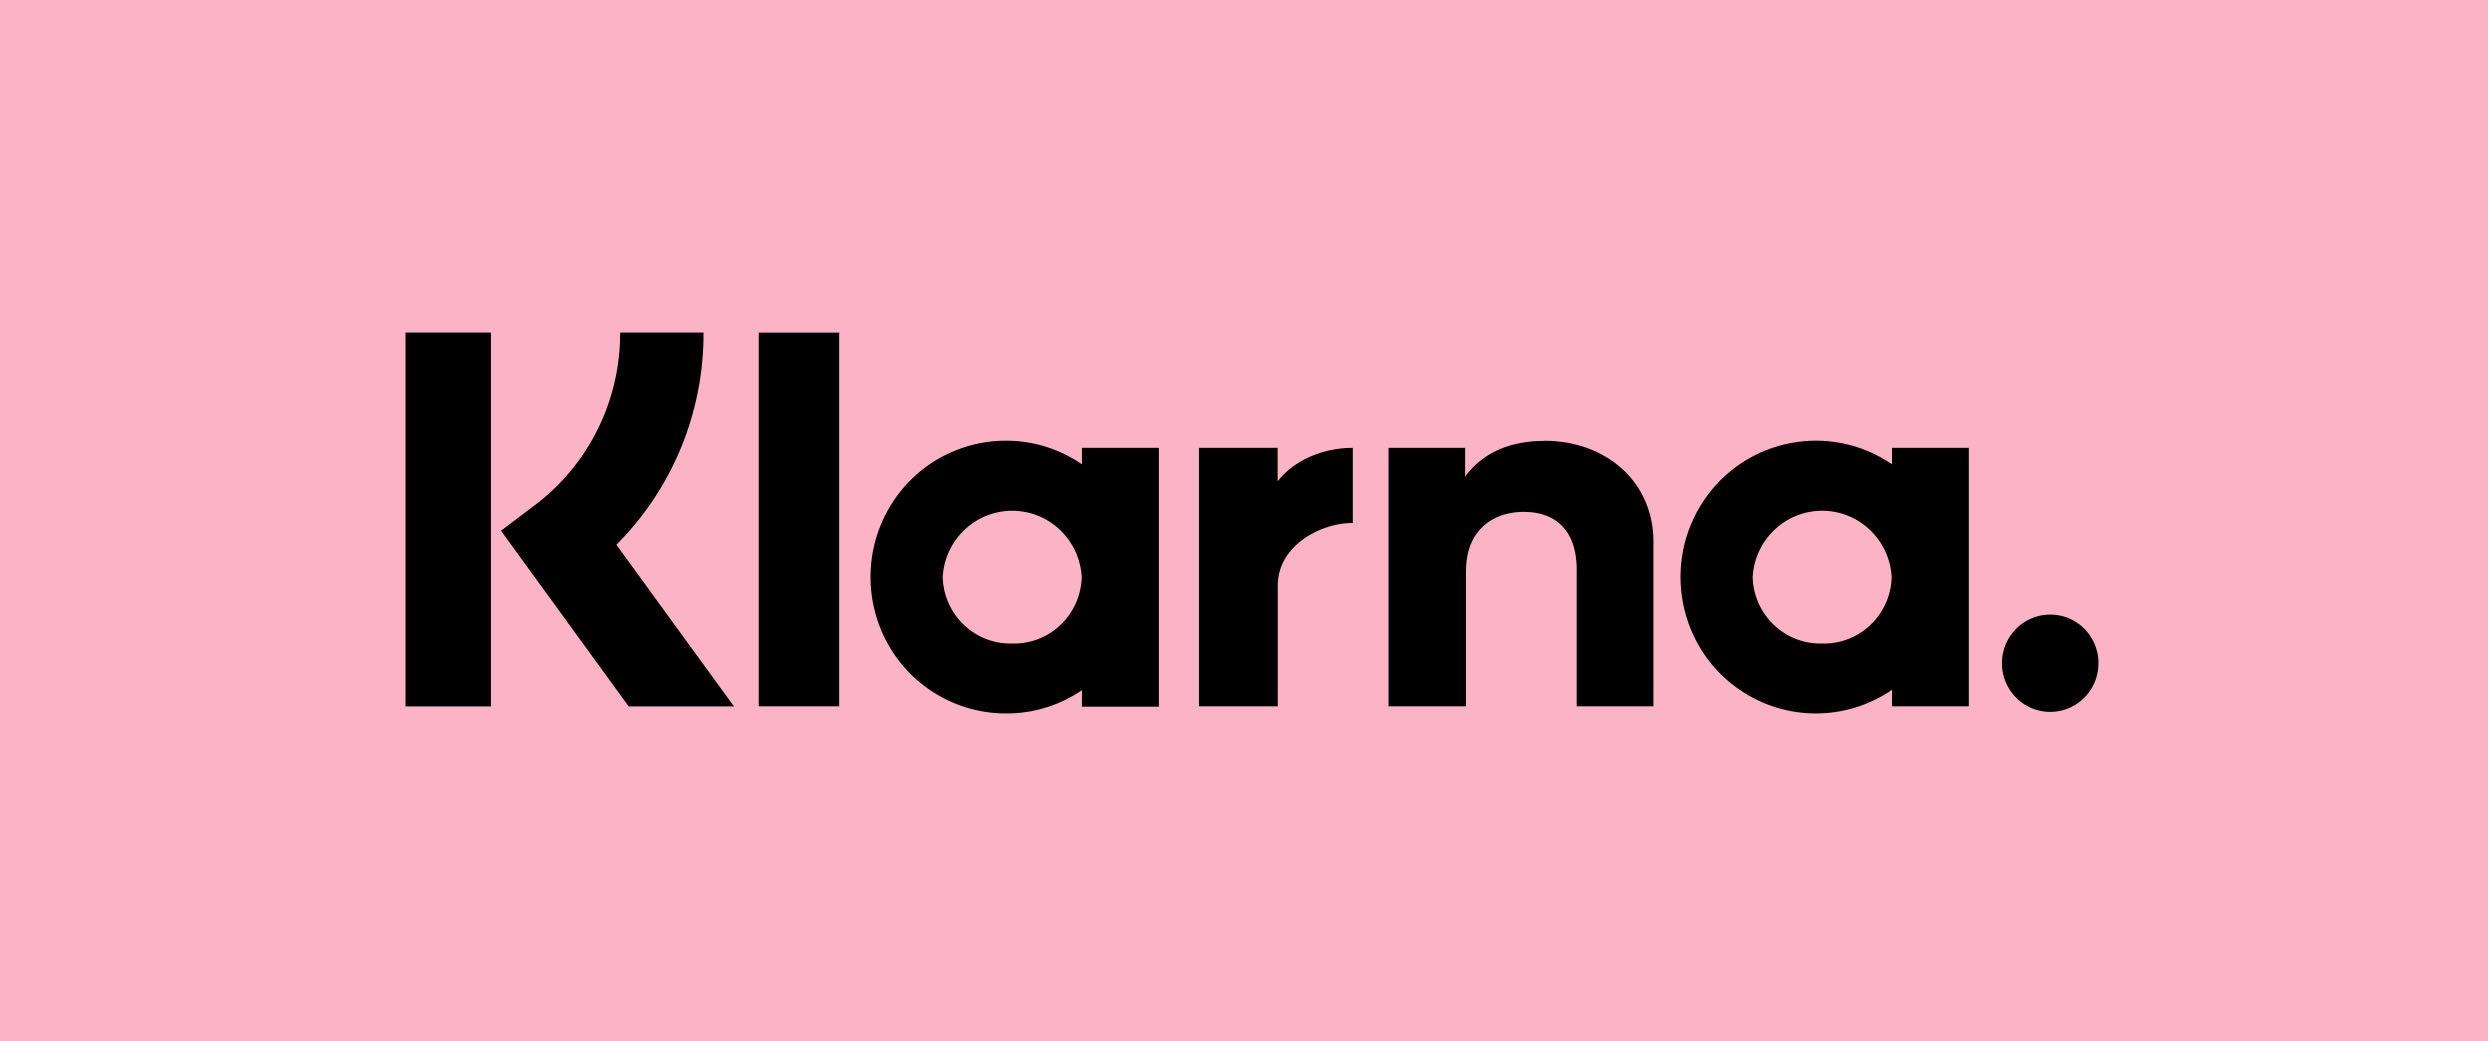 klarna-launches-7-99-klarna-plus-subscription-plan-ahead-of-ipo